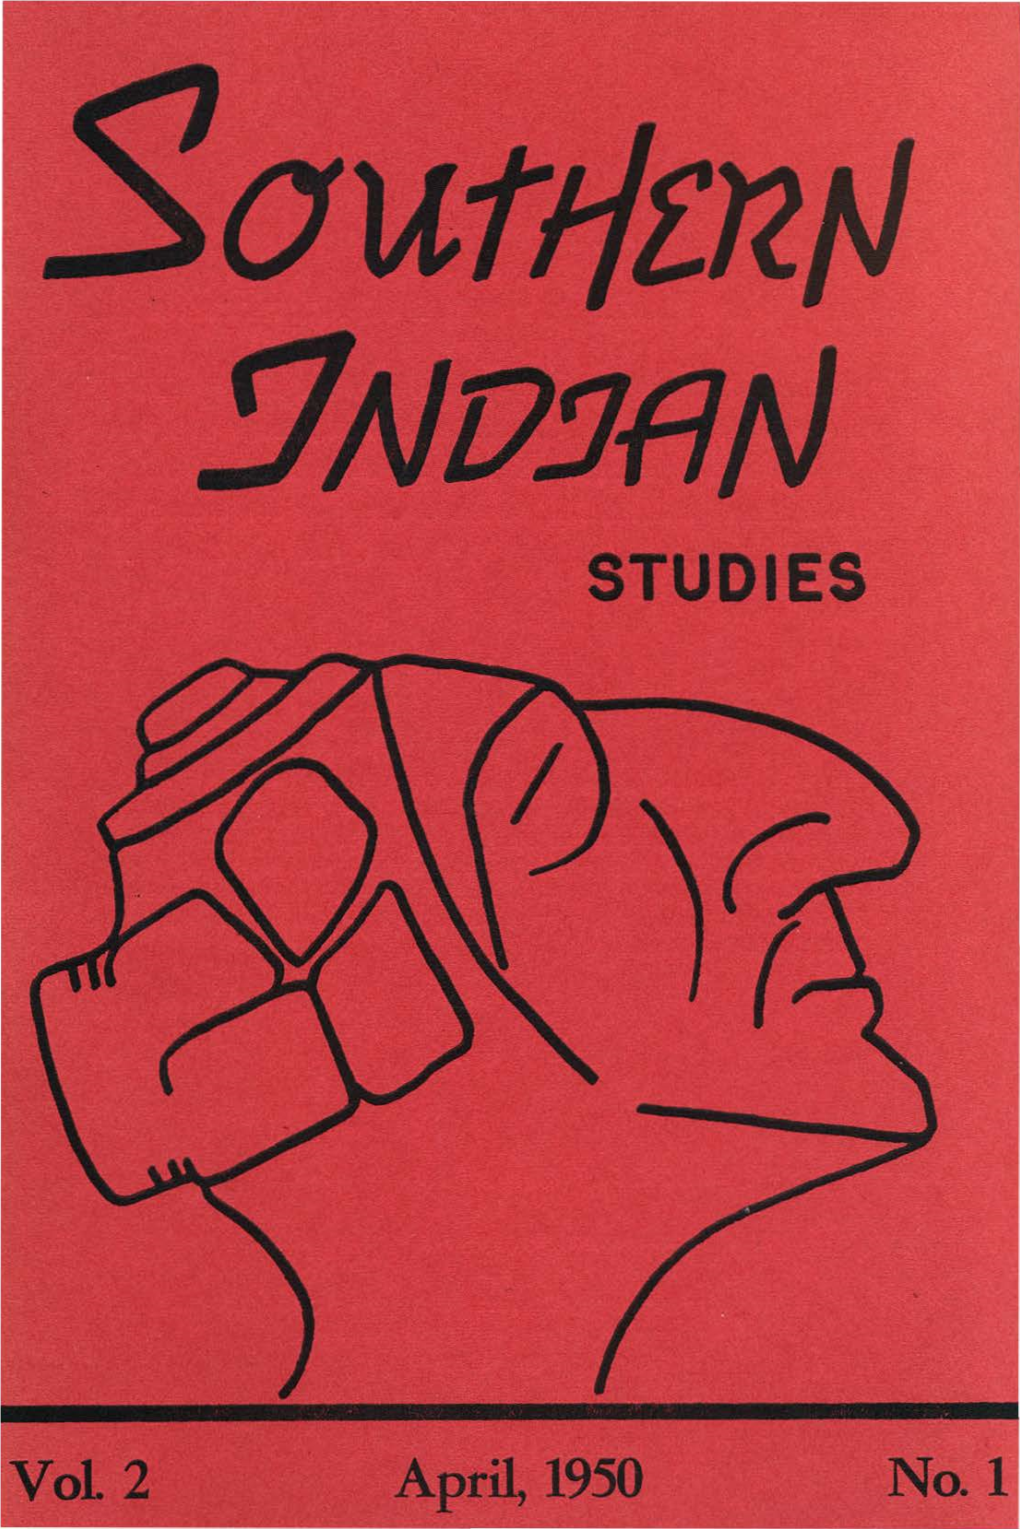 Southern Indian Studies, Vol. 2, No. 1